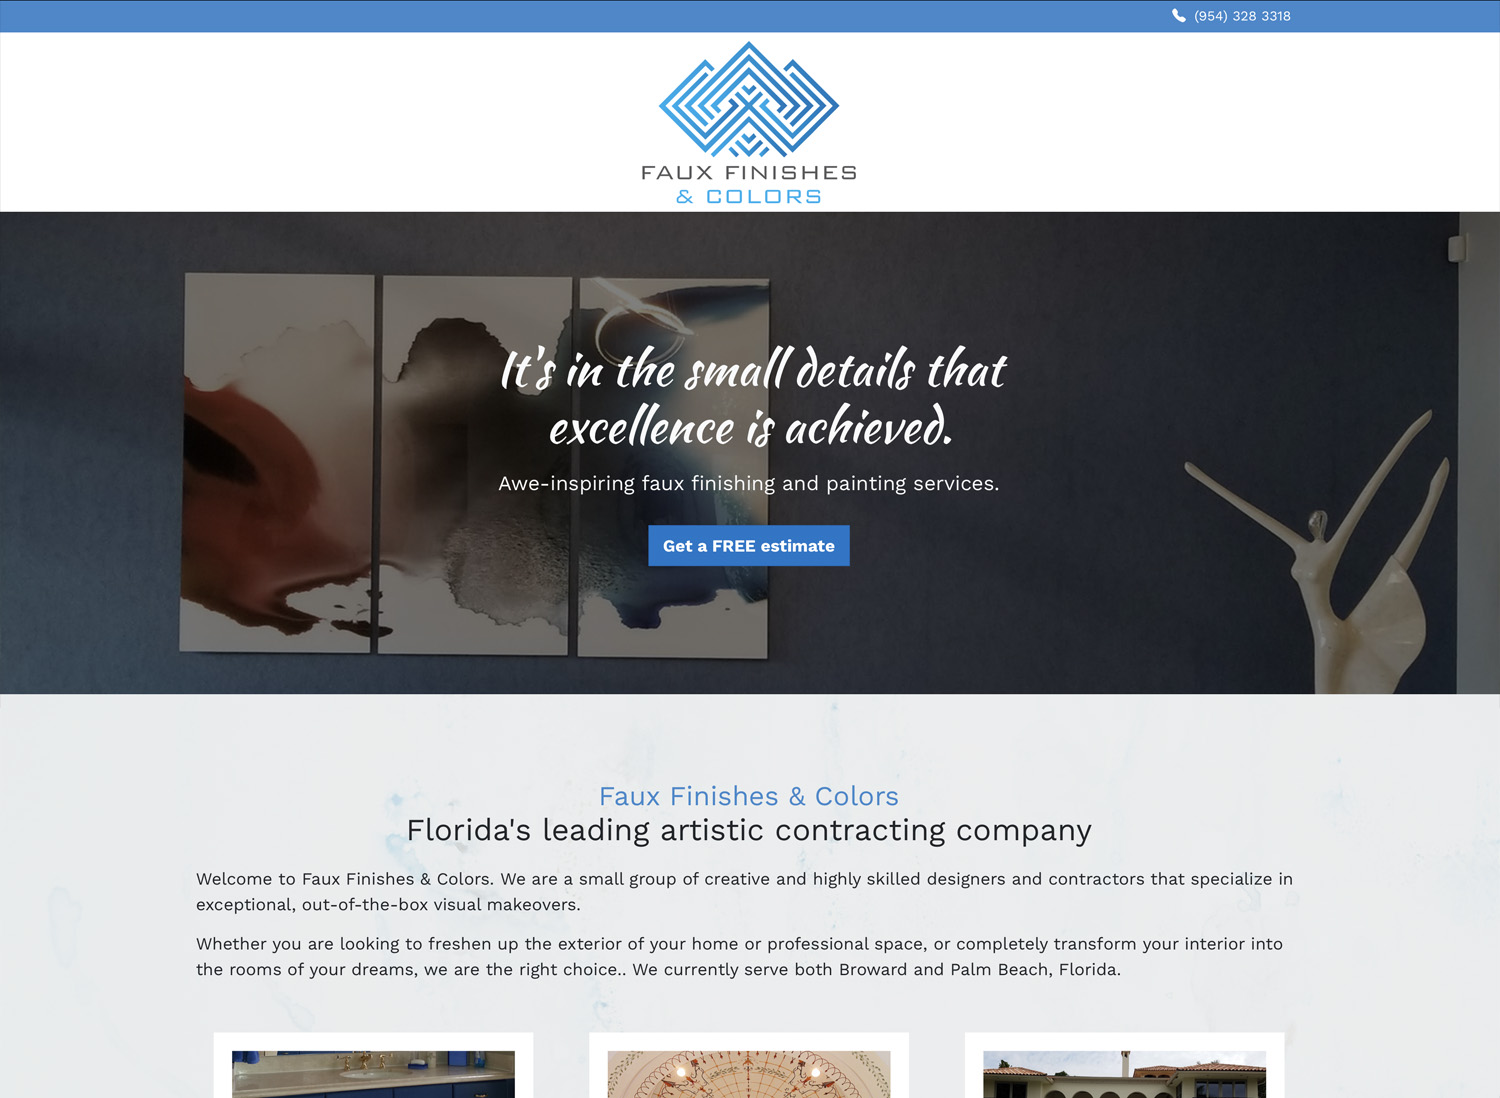 GF Creative Inc custom built websites